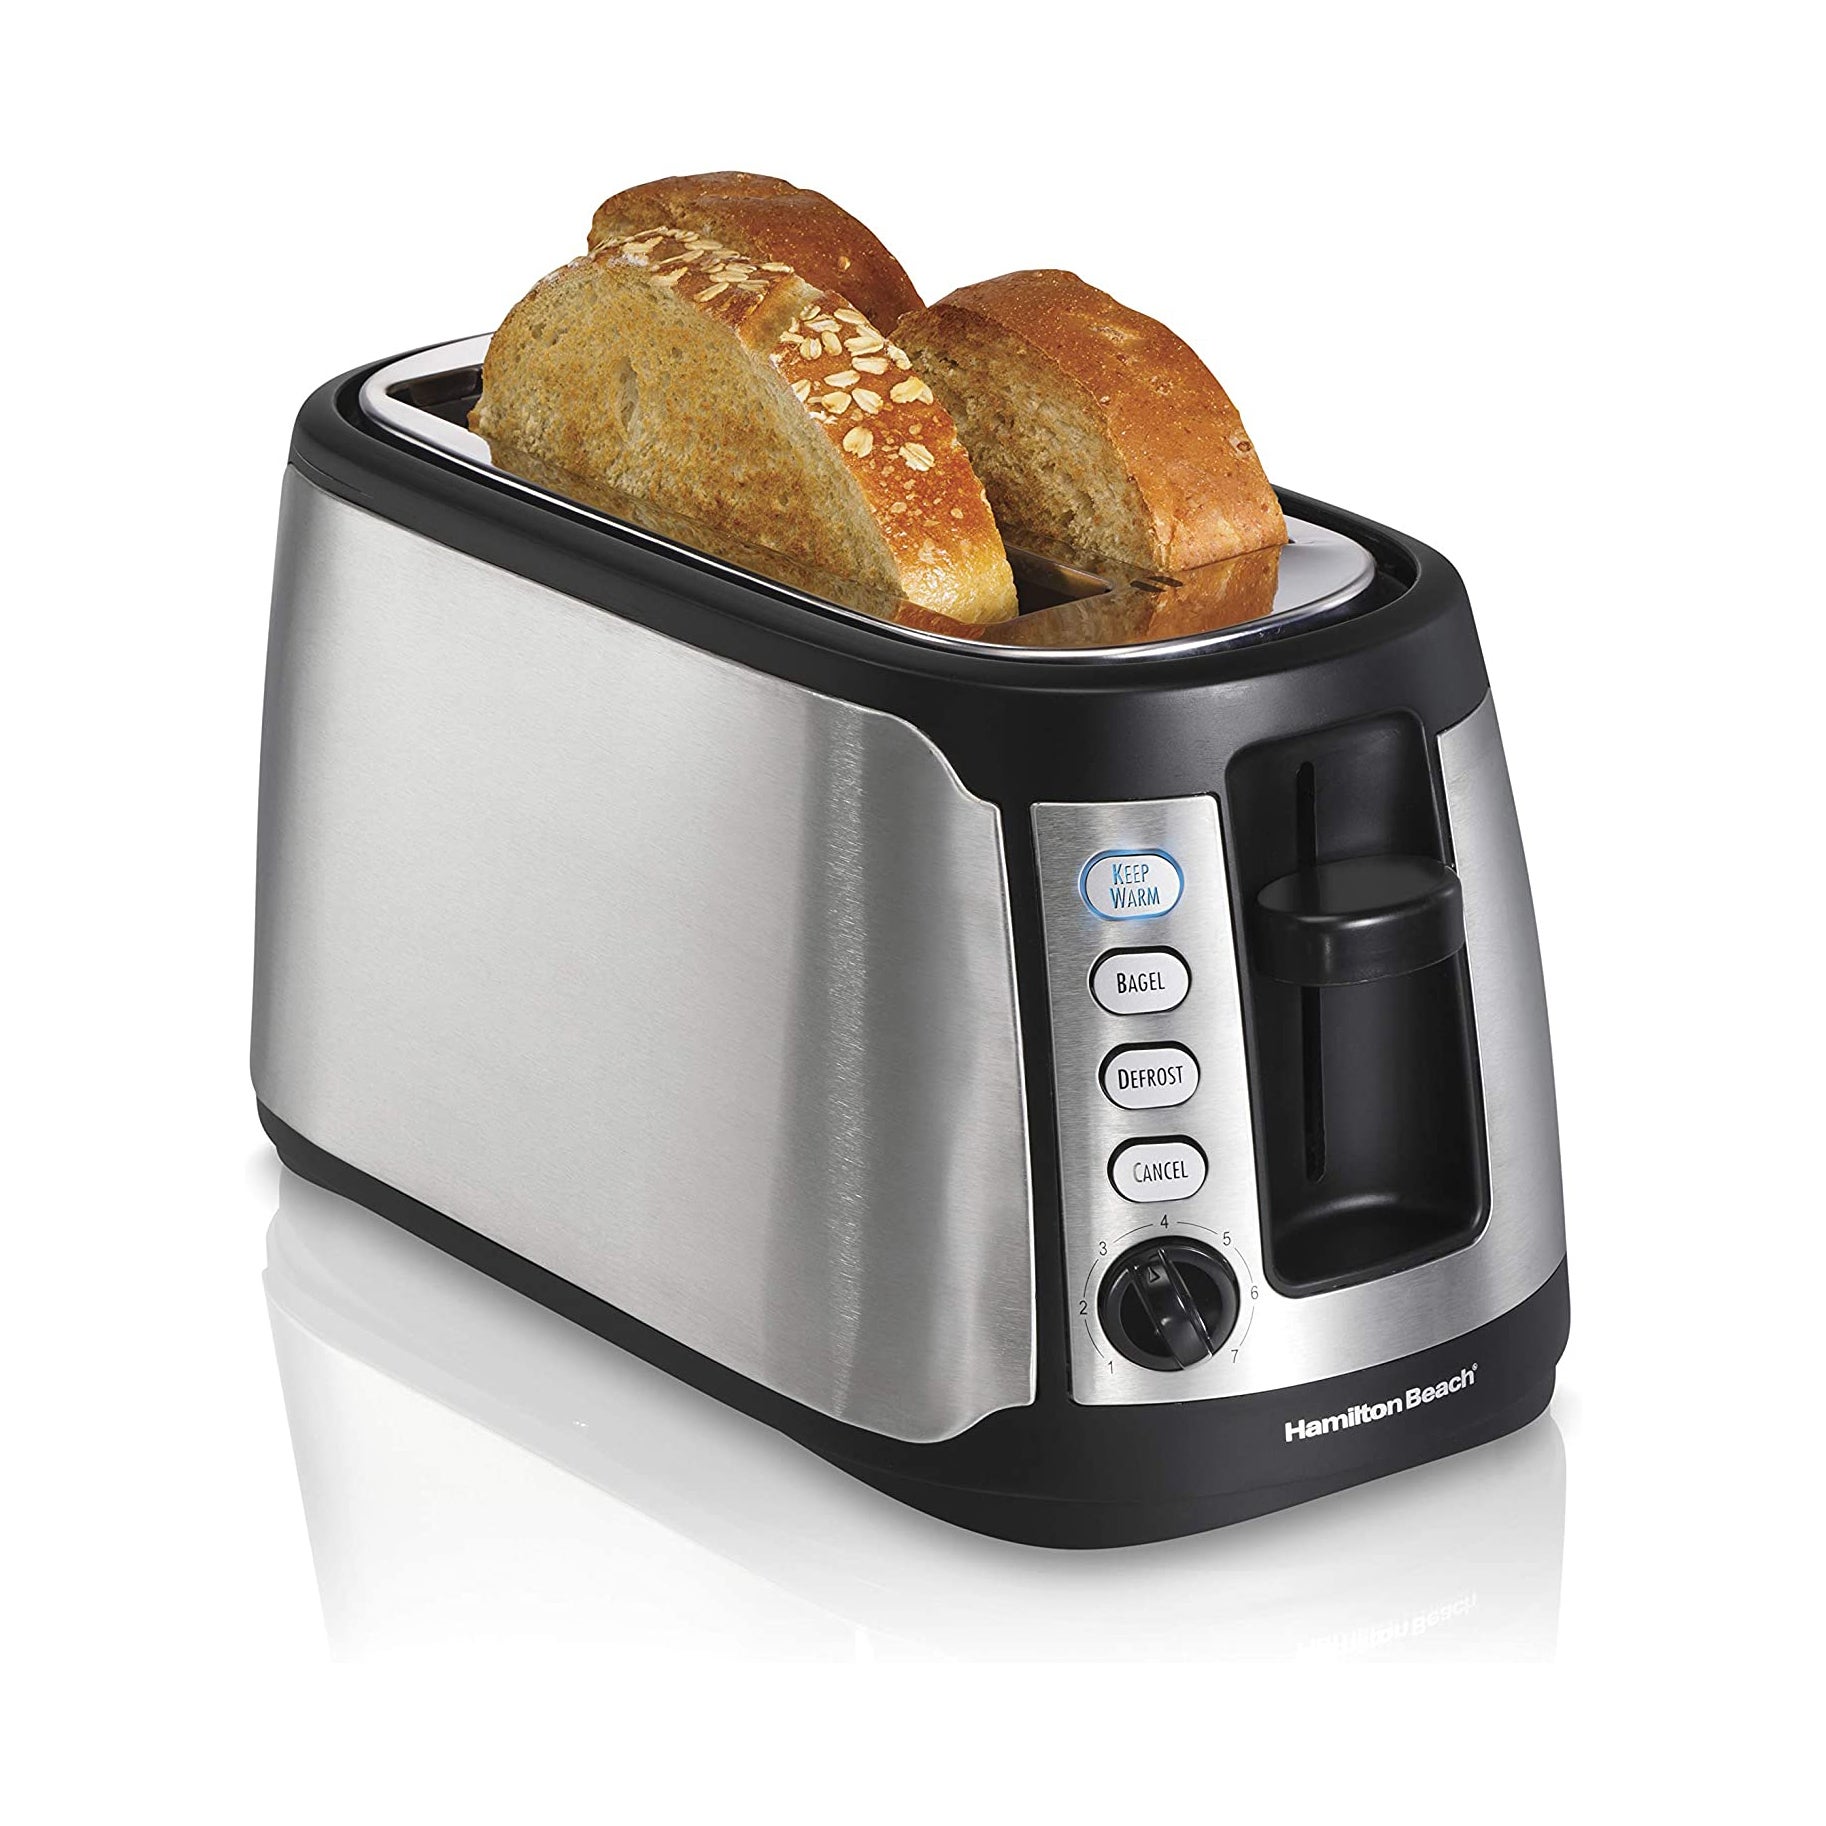 https://www.saveur.com/uploads/2021/09/29/The-Best-Four-Slice-Toasters-Option-Hamilton-Beach-Extra-Wide-Slot-Toaster.jpg?auto=webp